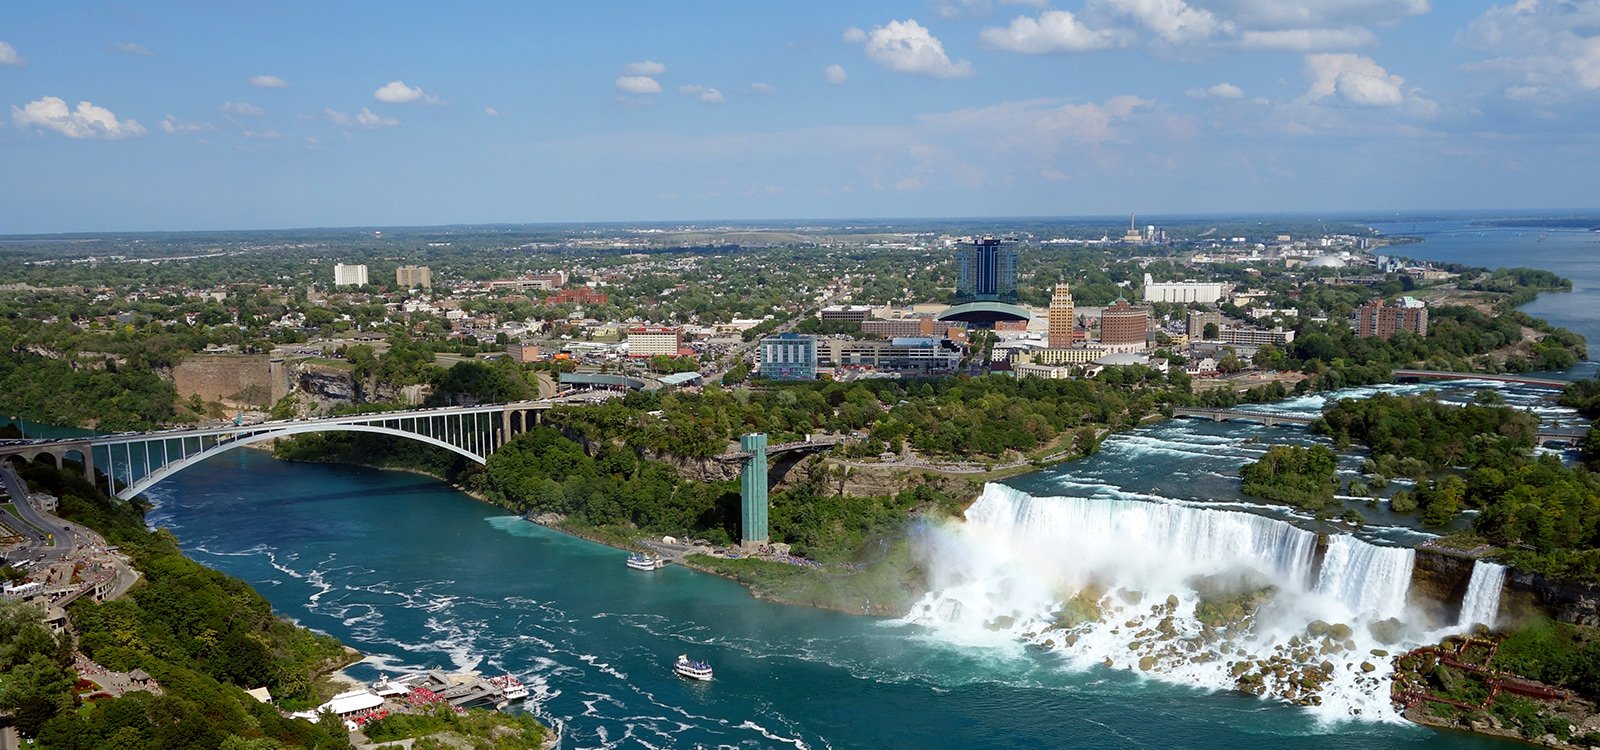 Developing Niagara Falls 2020